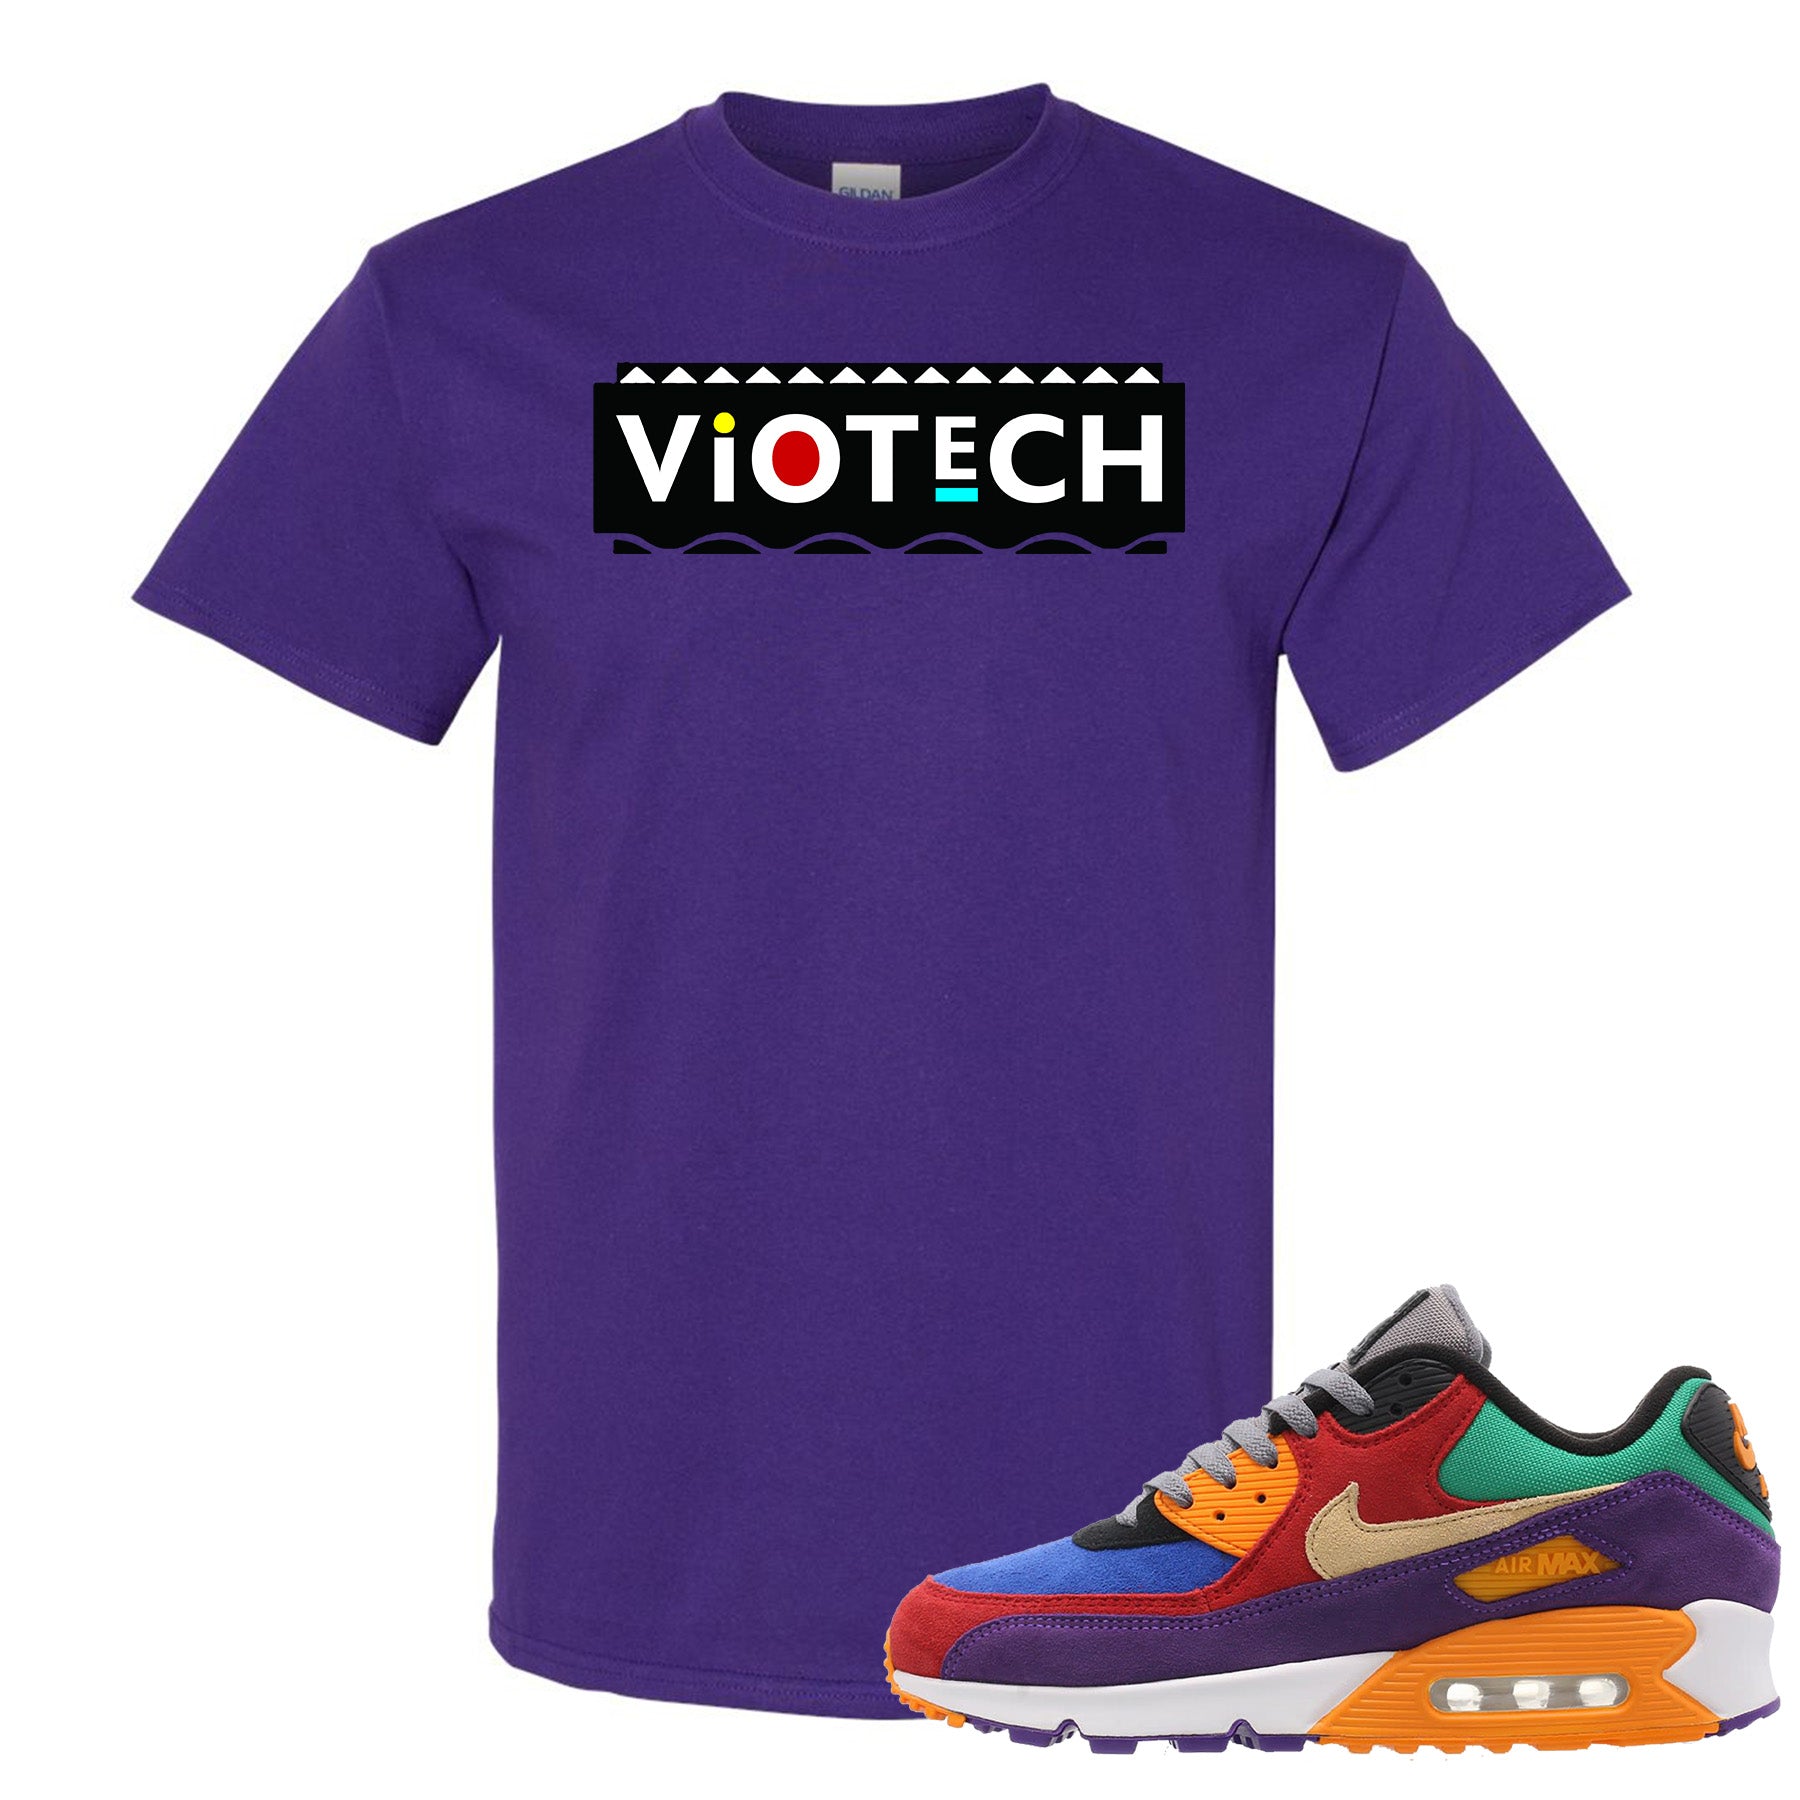 viotech shirt